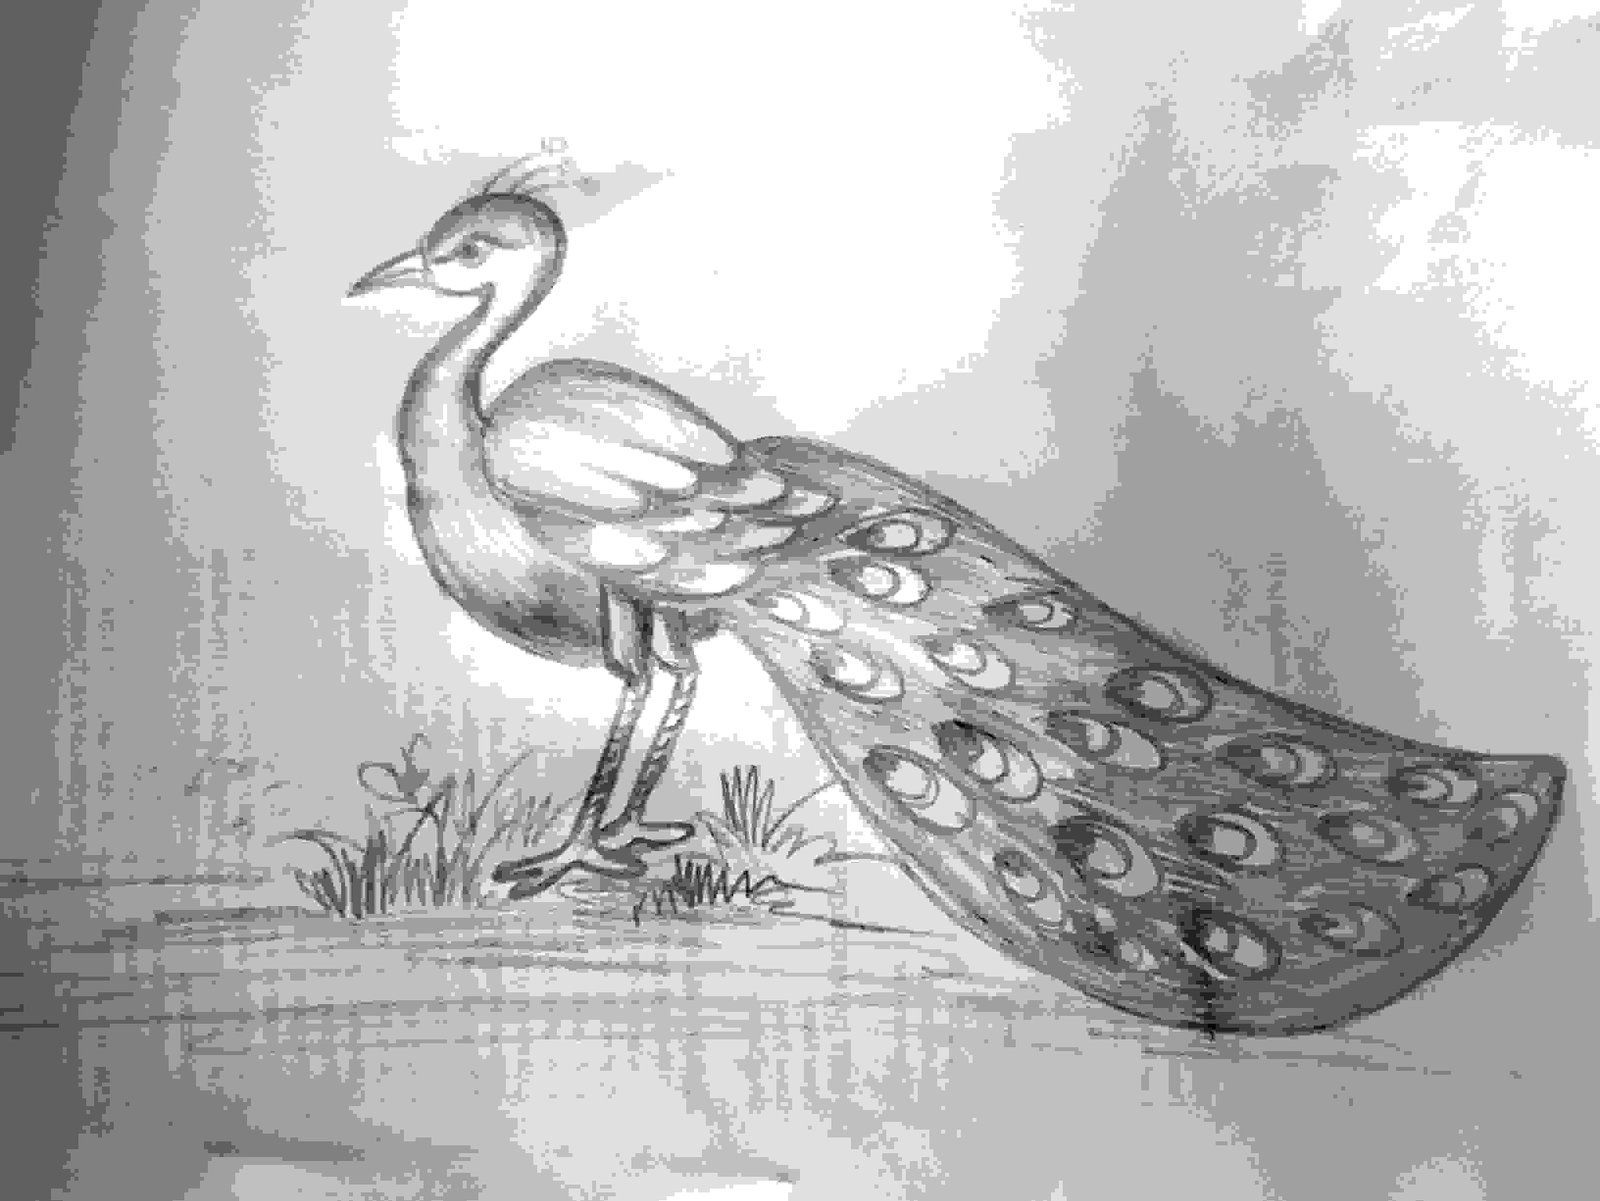 India Blue Peacock Drawing Art Print by TaviaSanza | Society6